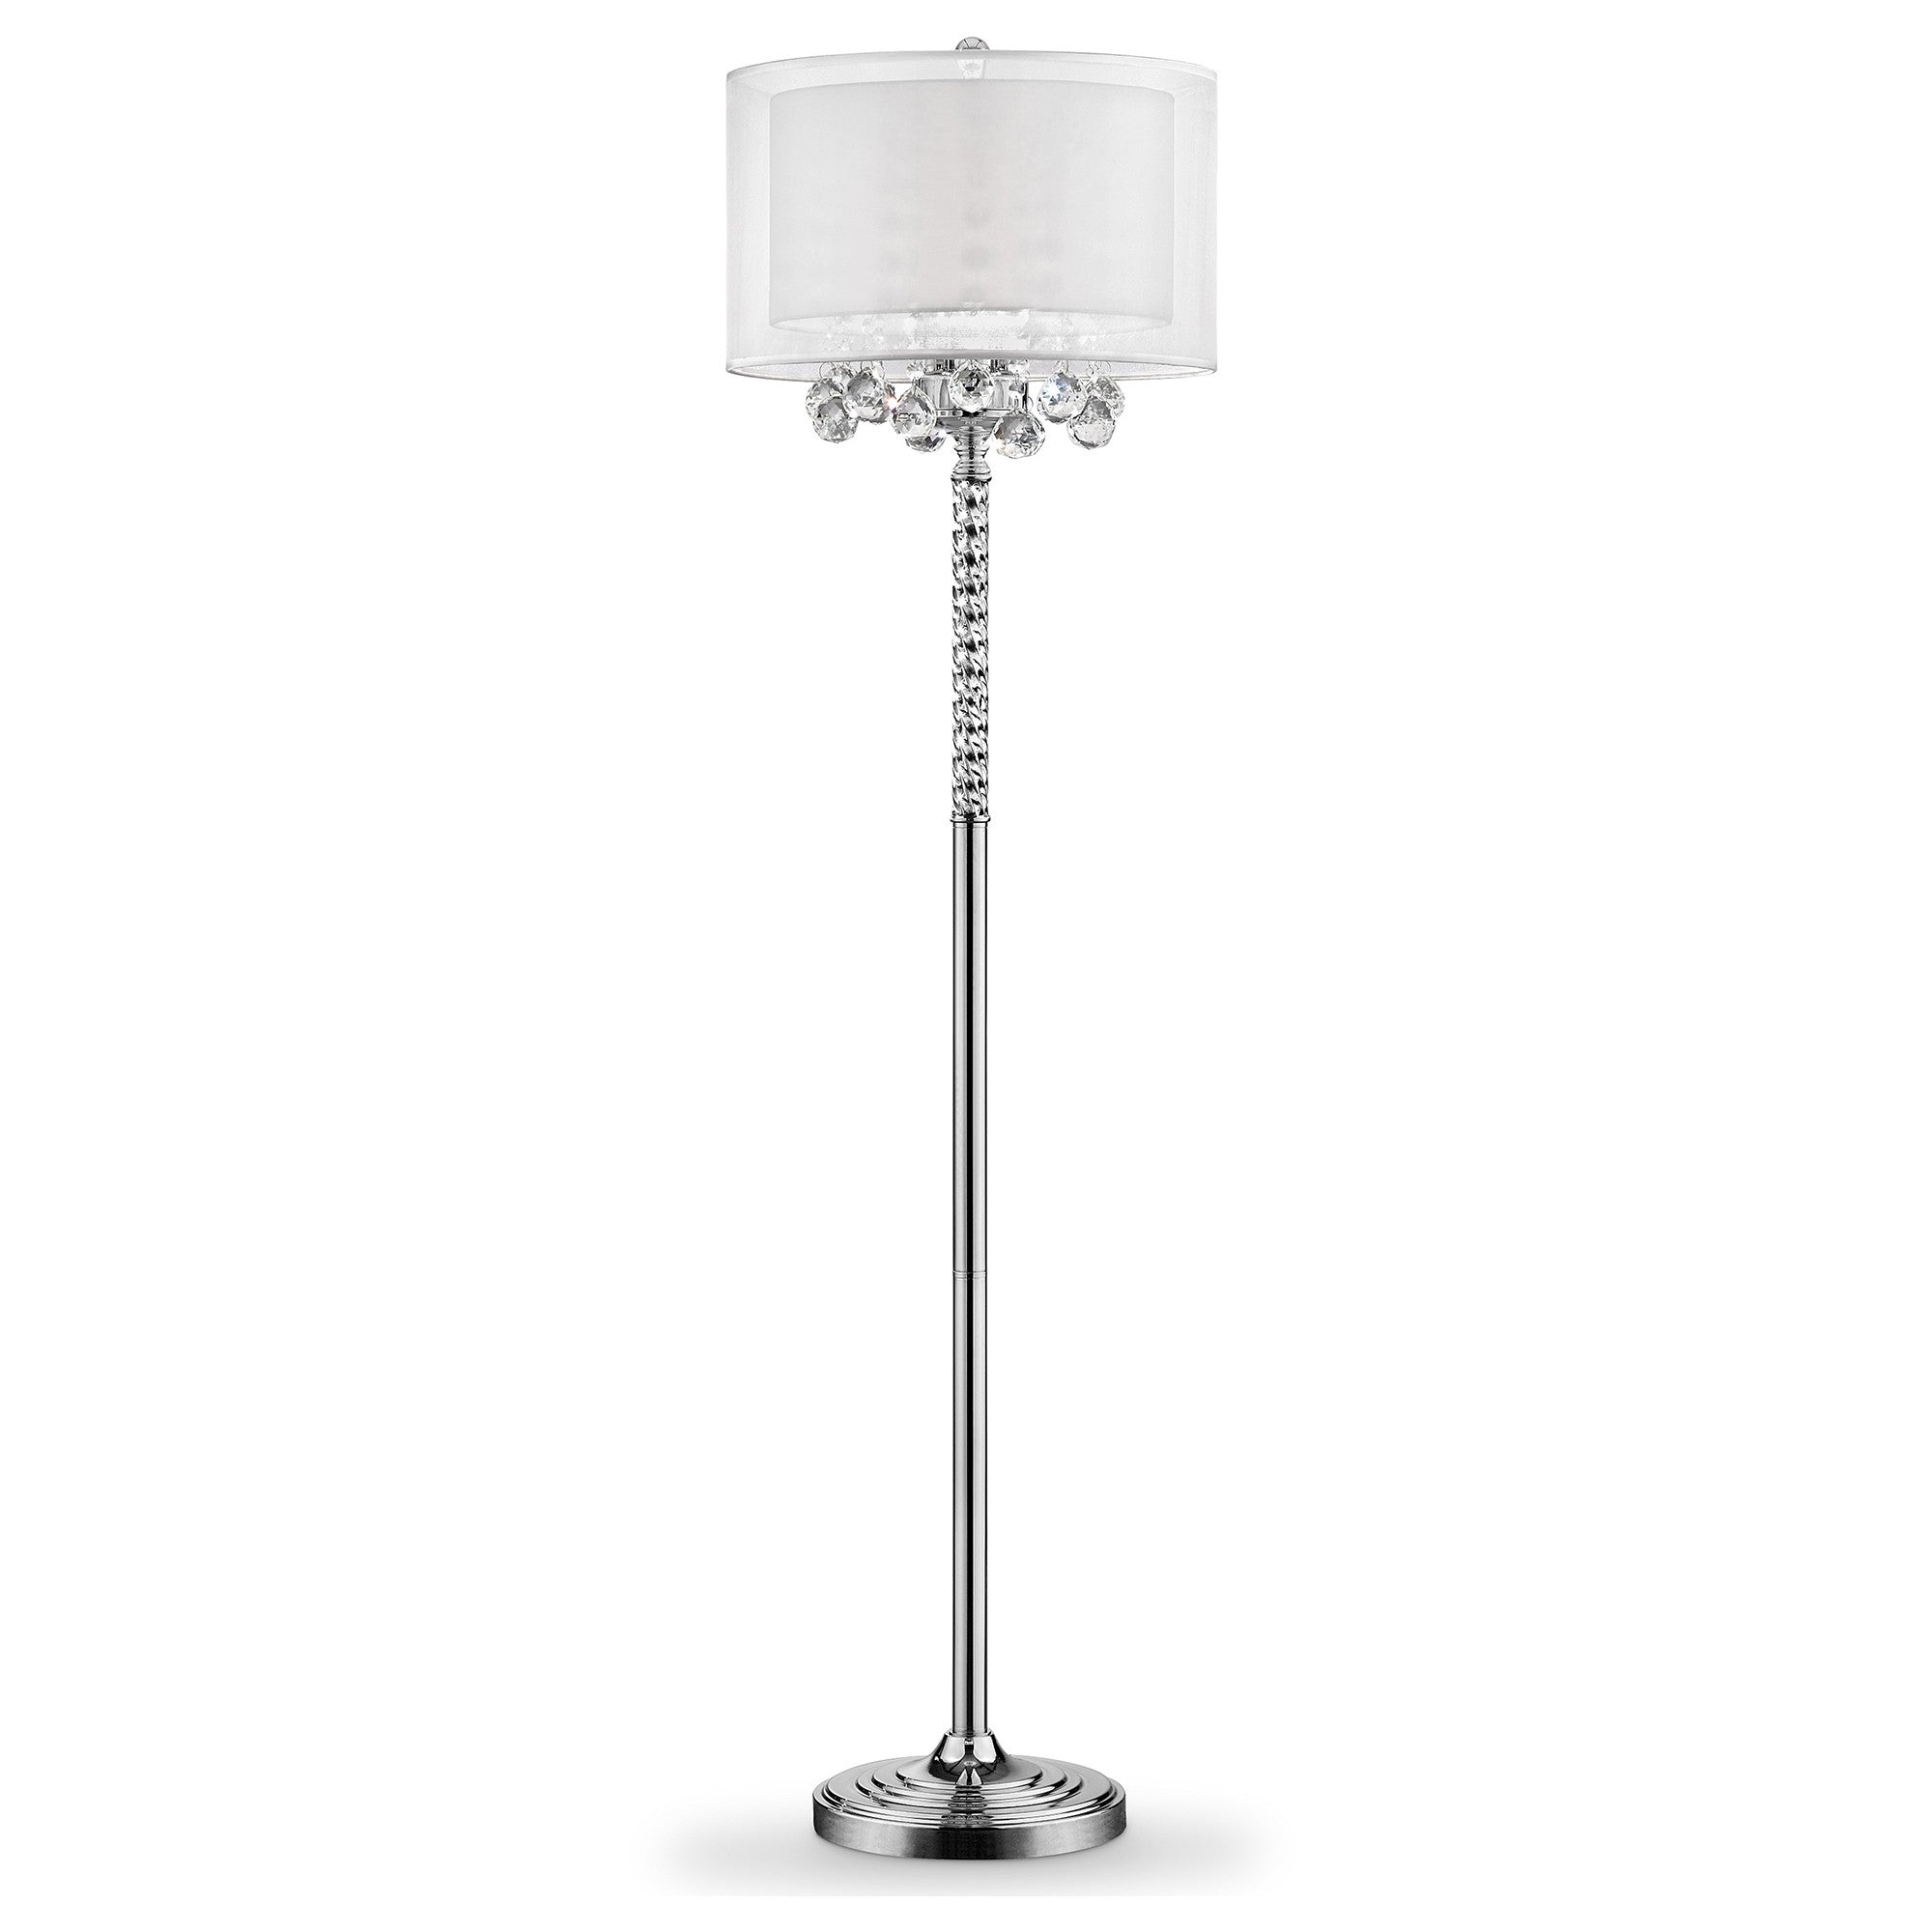 63" Steel Three Light Candelabra Floor Lamp With White Drum Shade